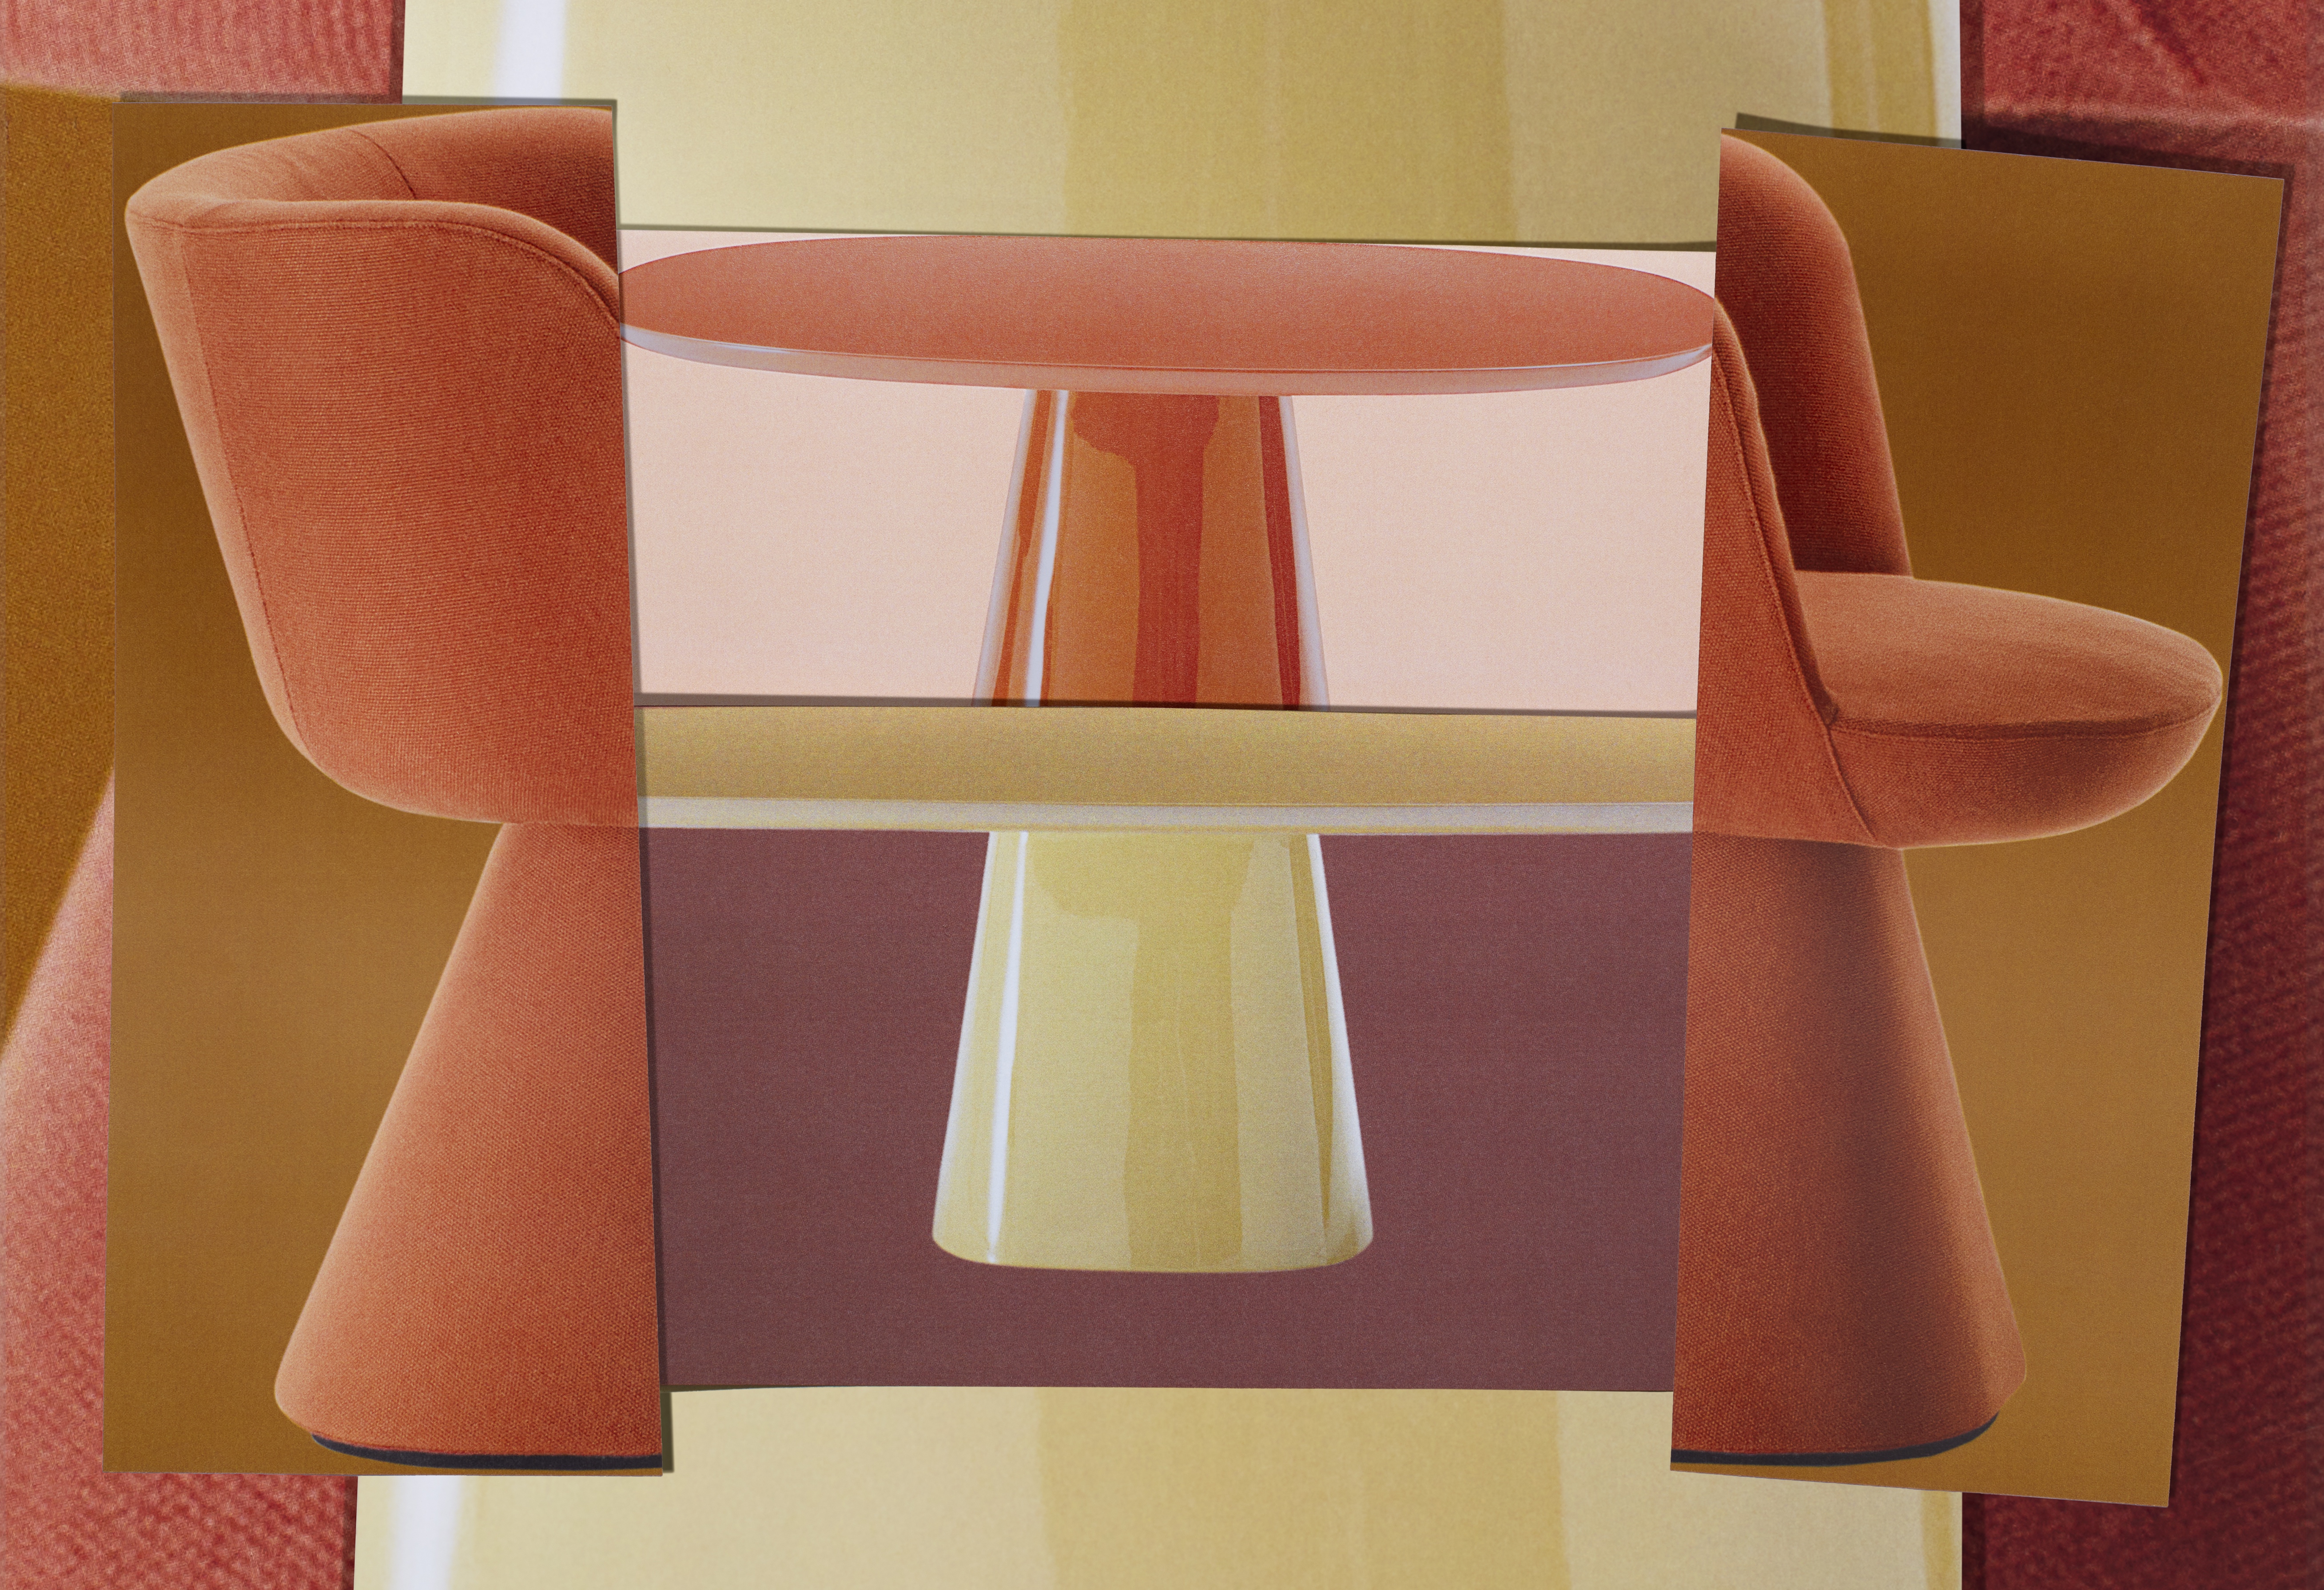 Monica Armani B&B Italia furniture designs | Wallpaper